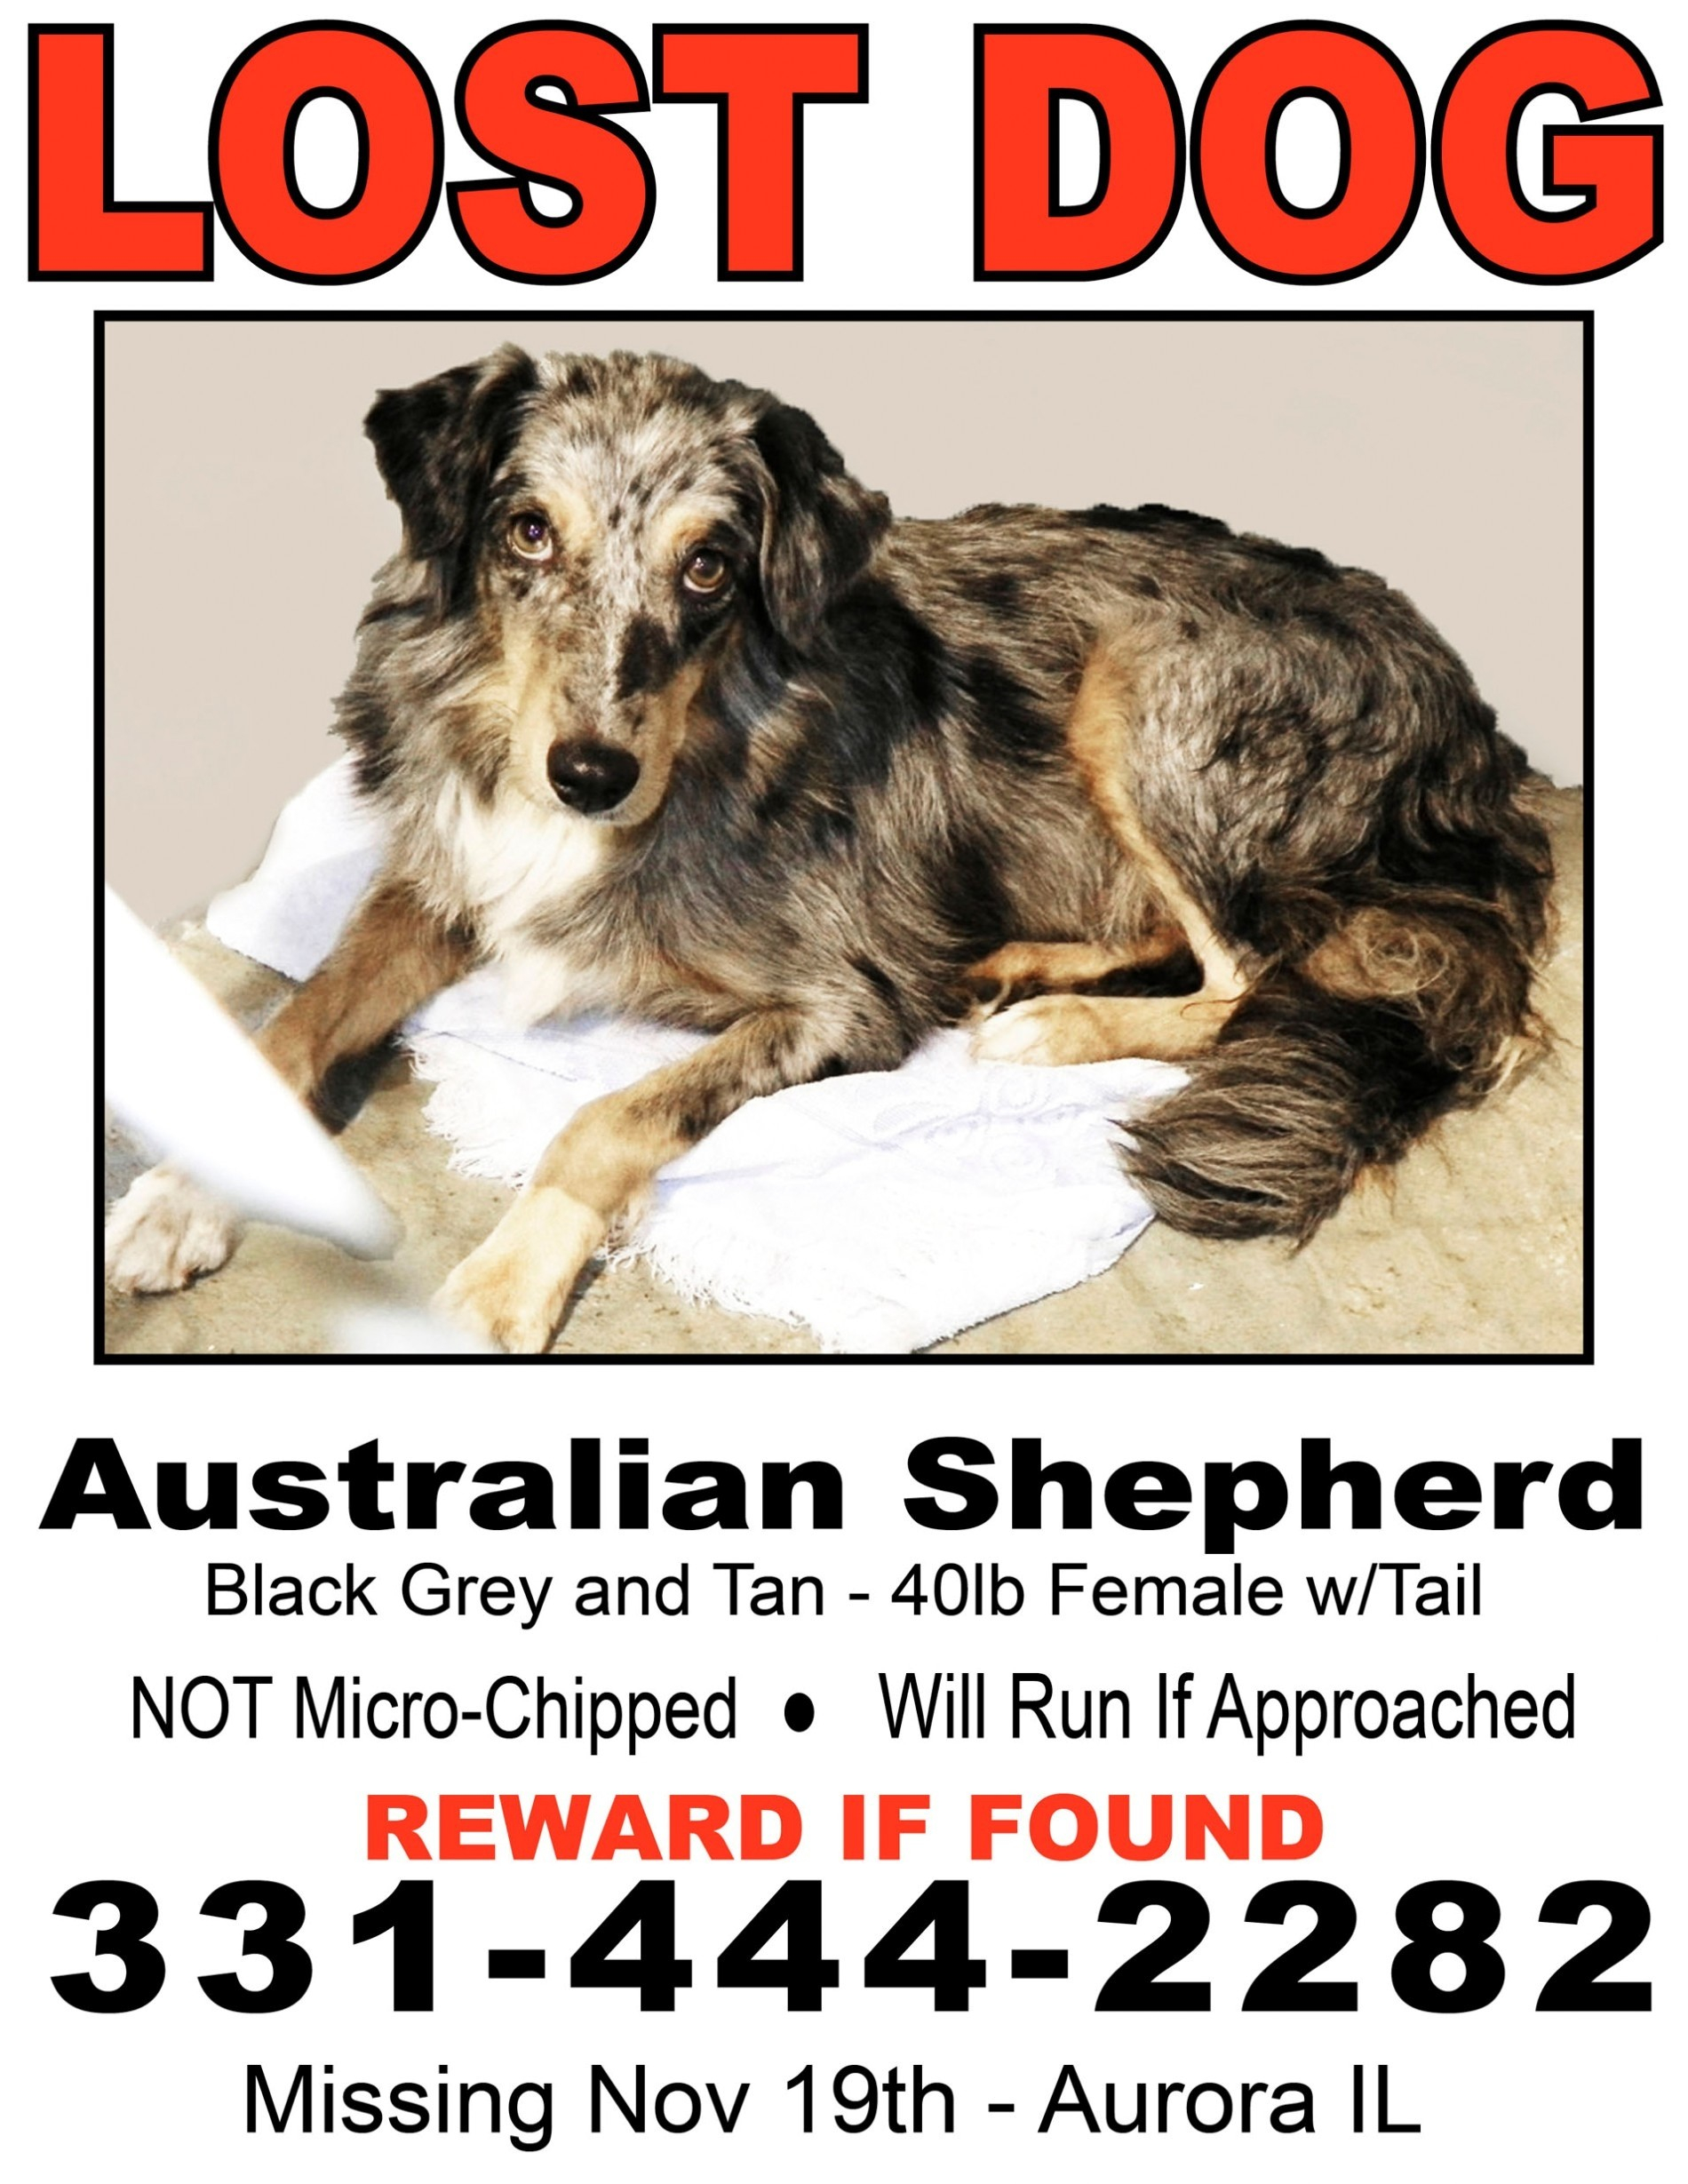 lost dog flyer template free - Sablon Regarding Found Dog Flyer Template Inside Found Dog Flyer Template